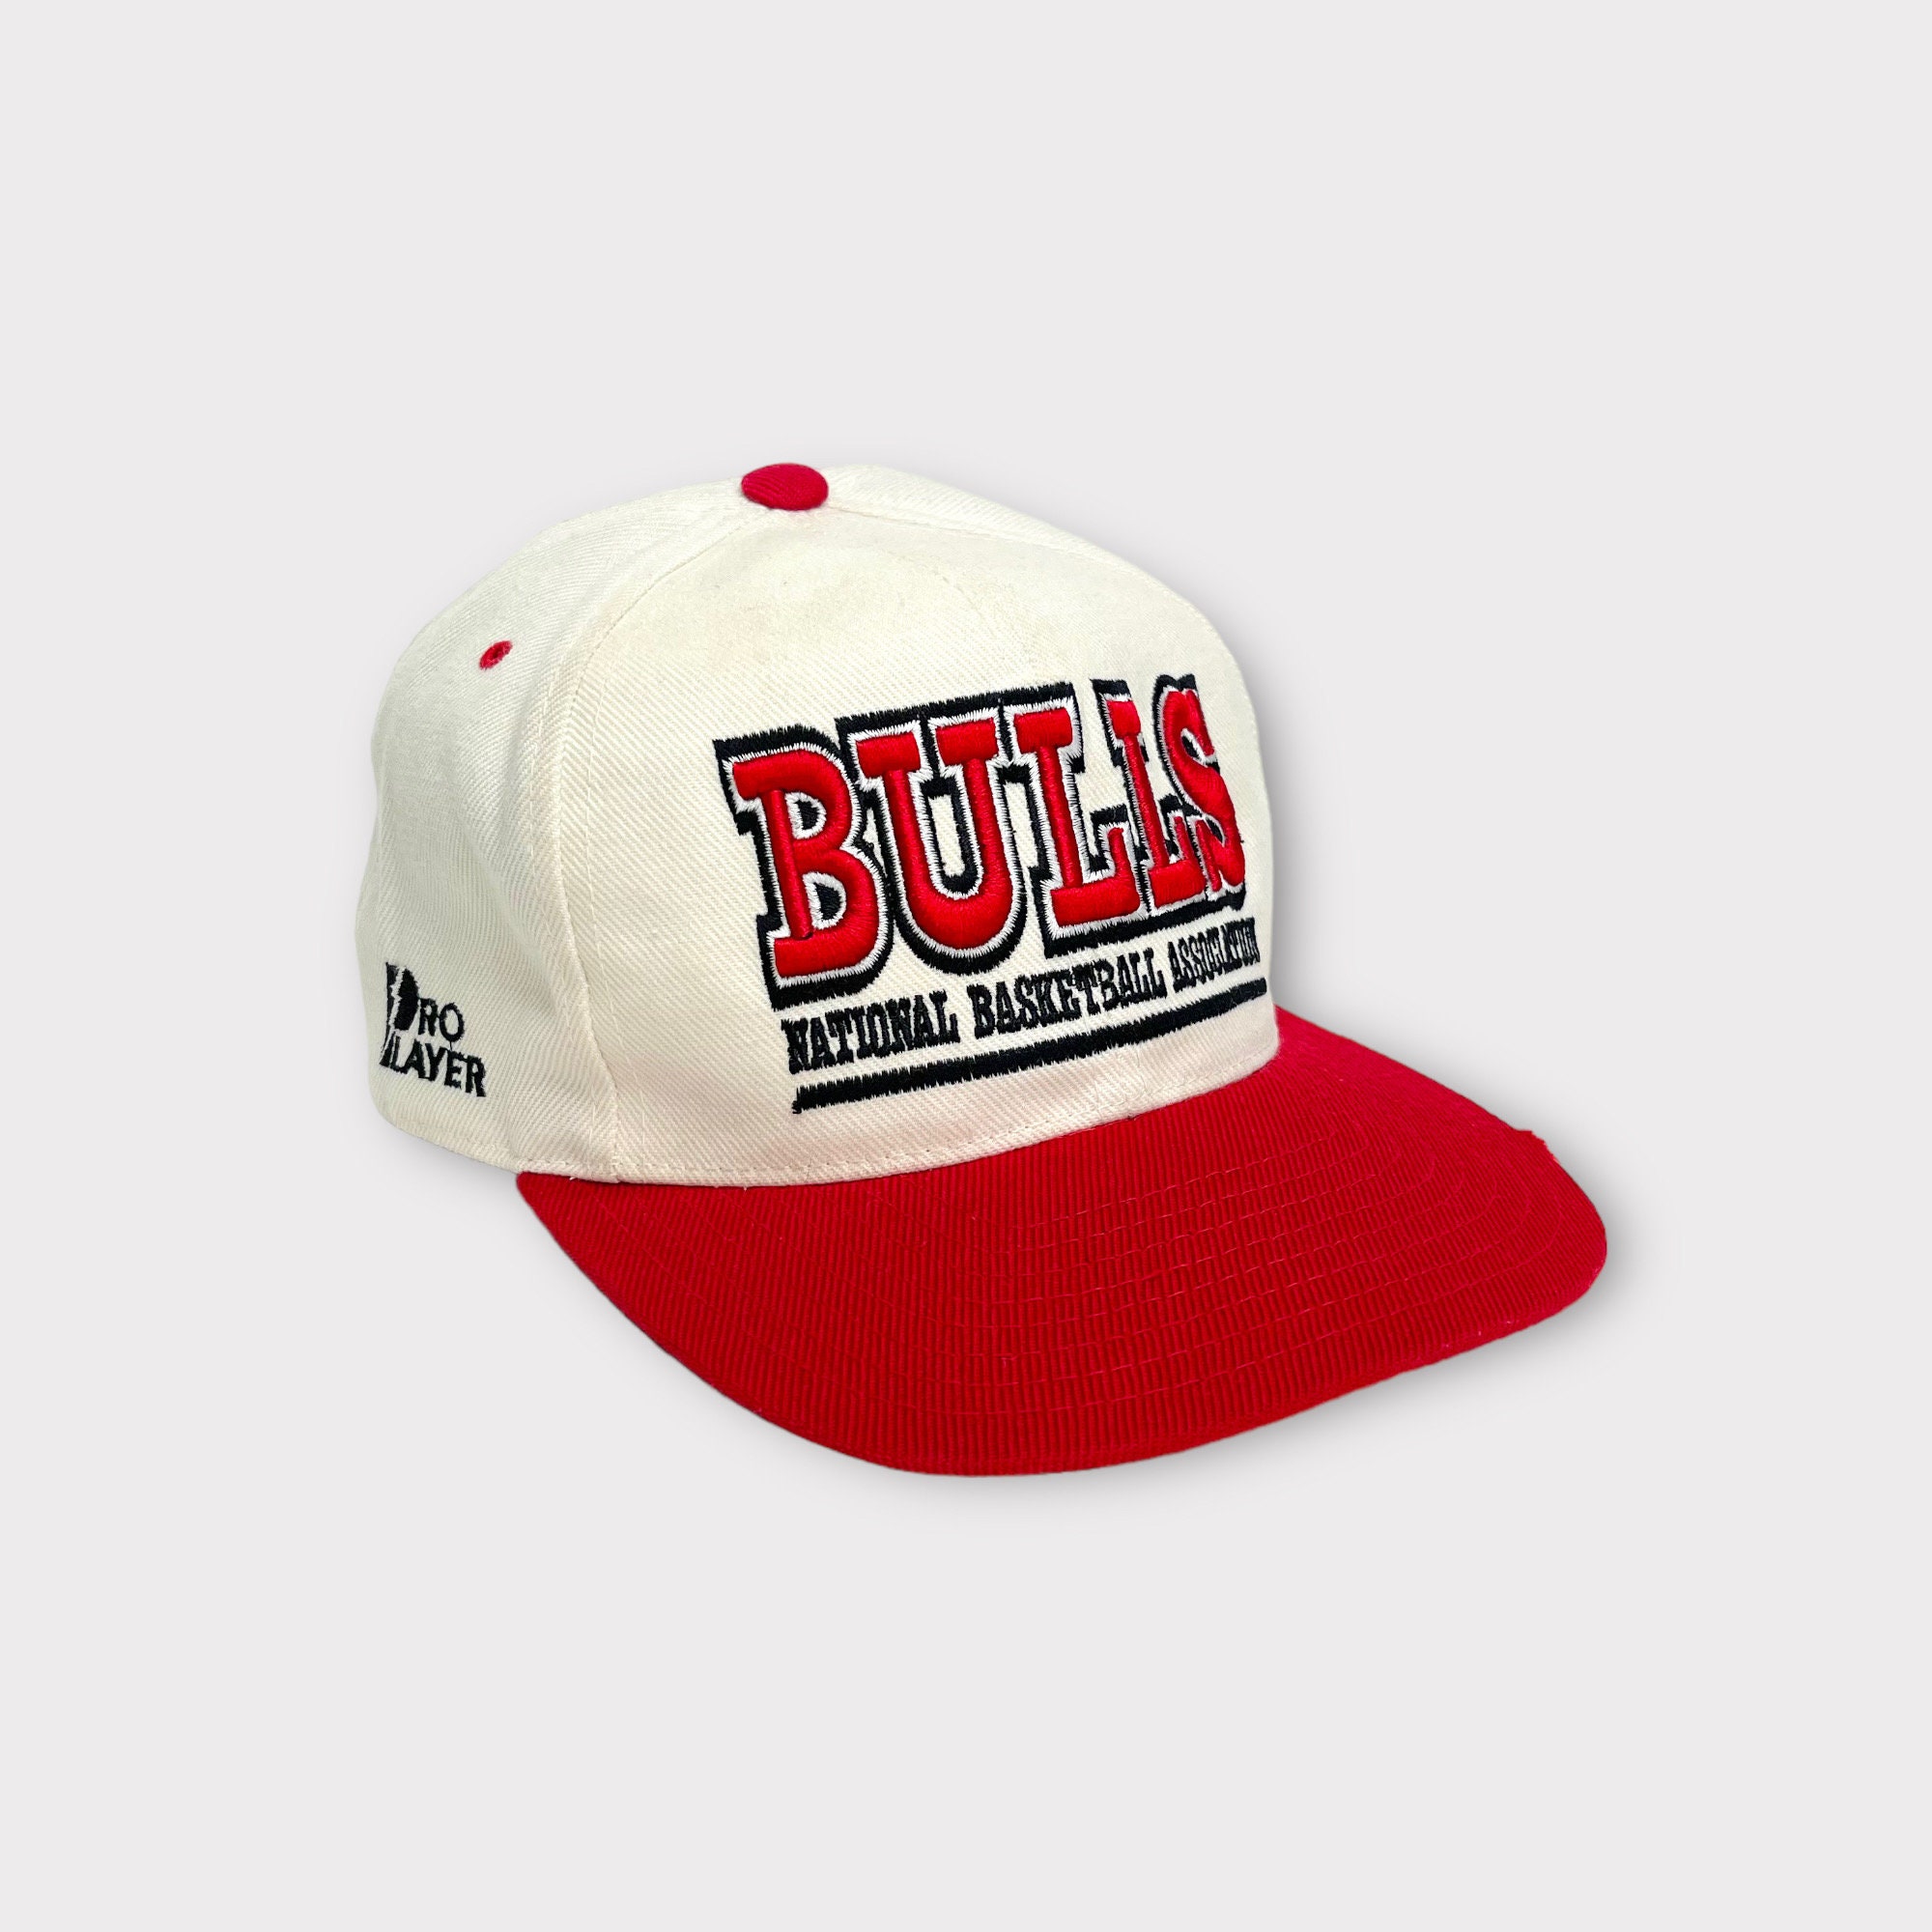 Chicago Bulls Hardwood Classics snake bill snap back hat in 2023